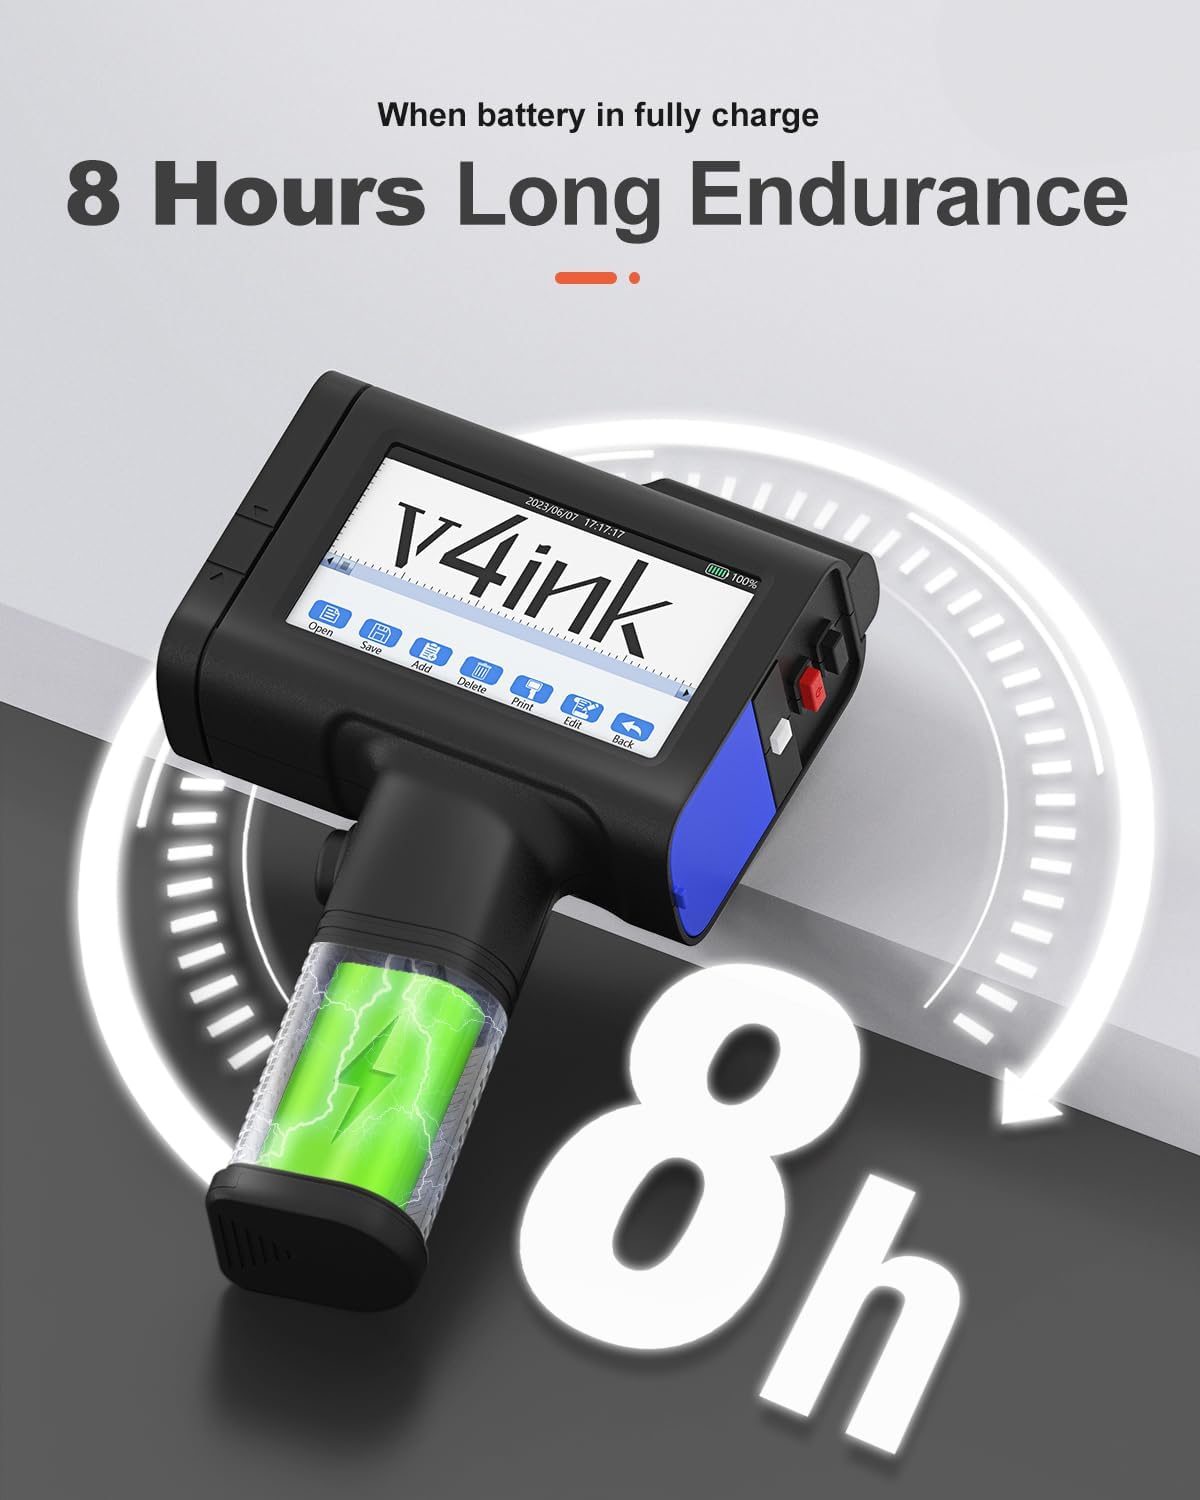 v4ink handheld printer with long battery endurance